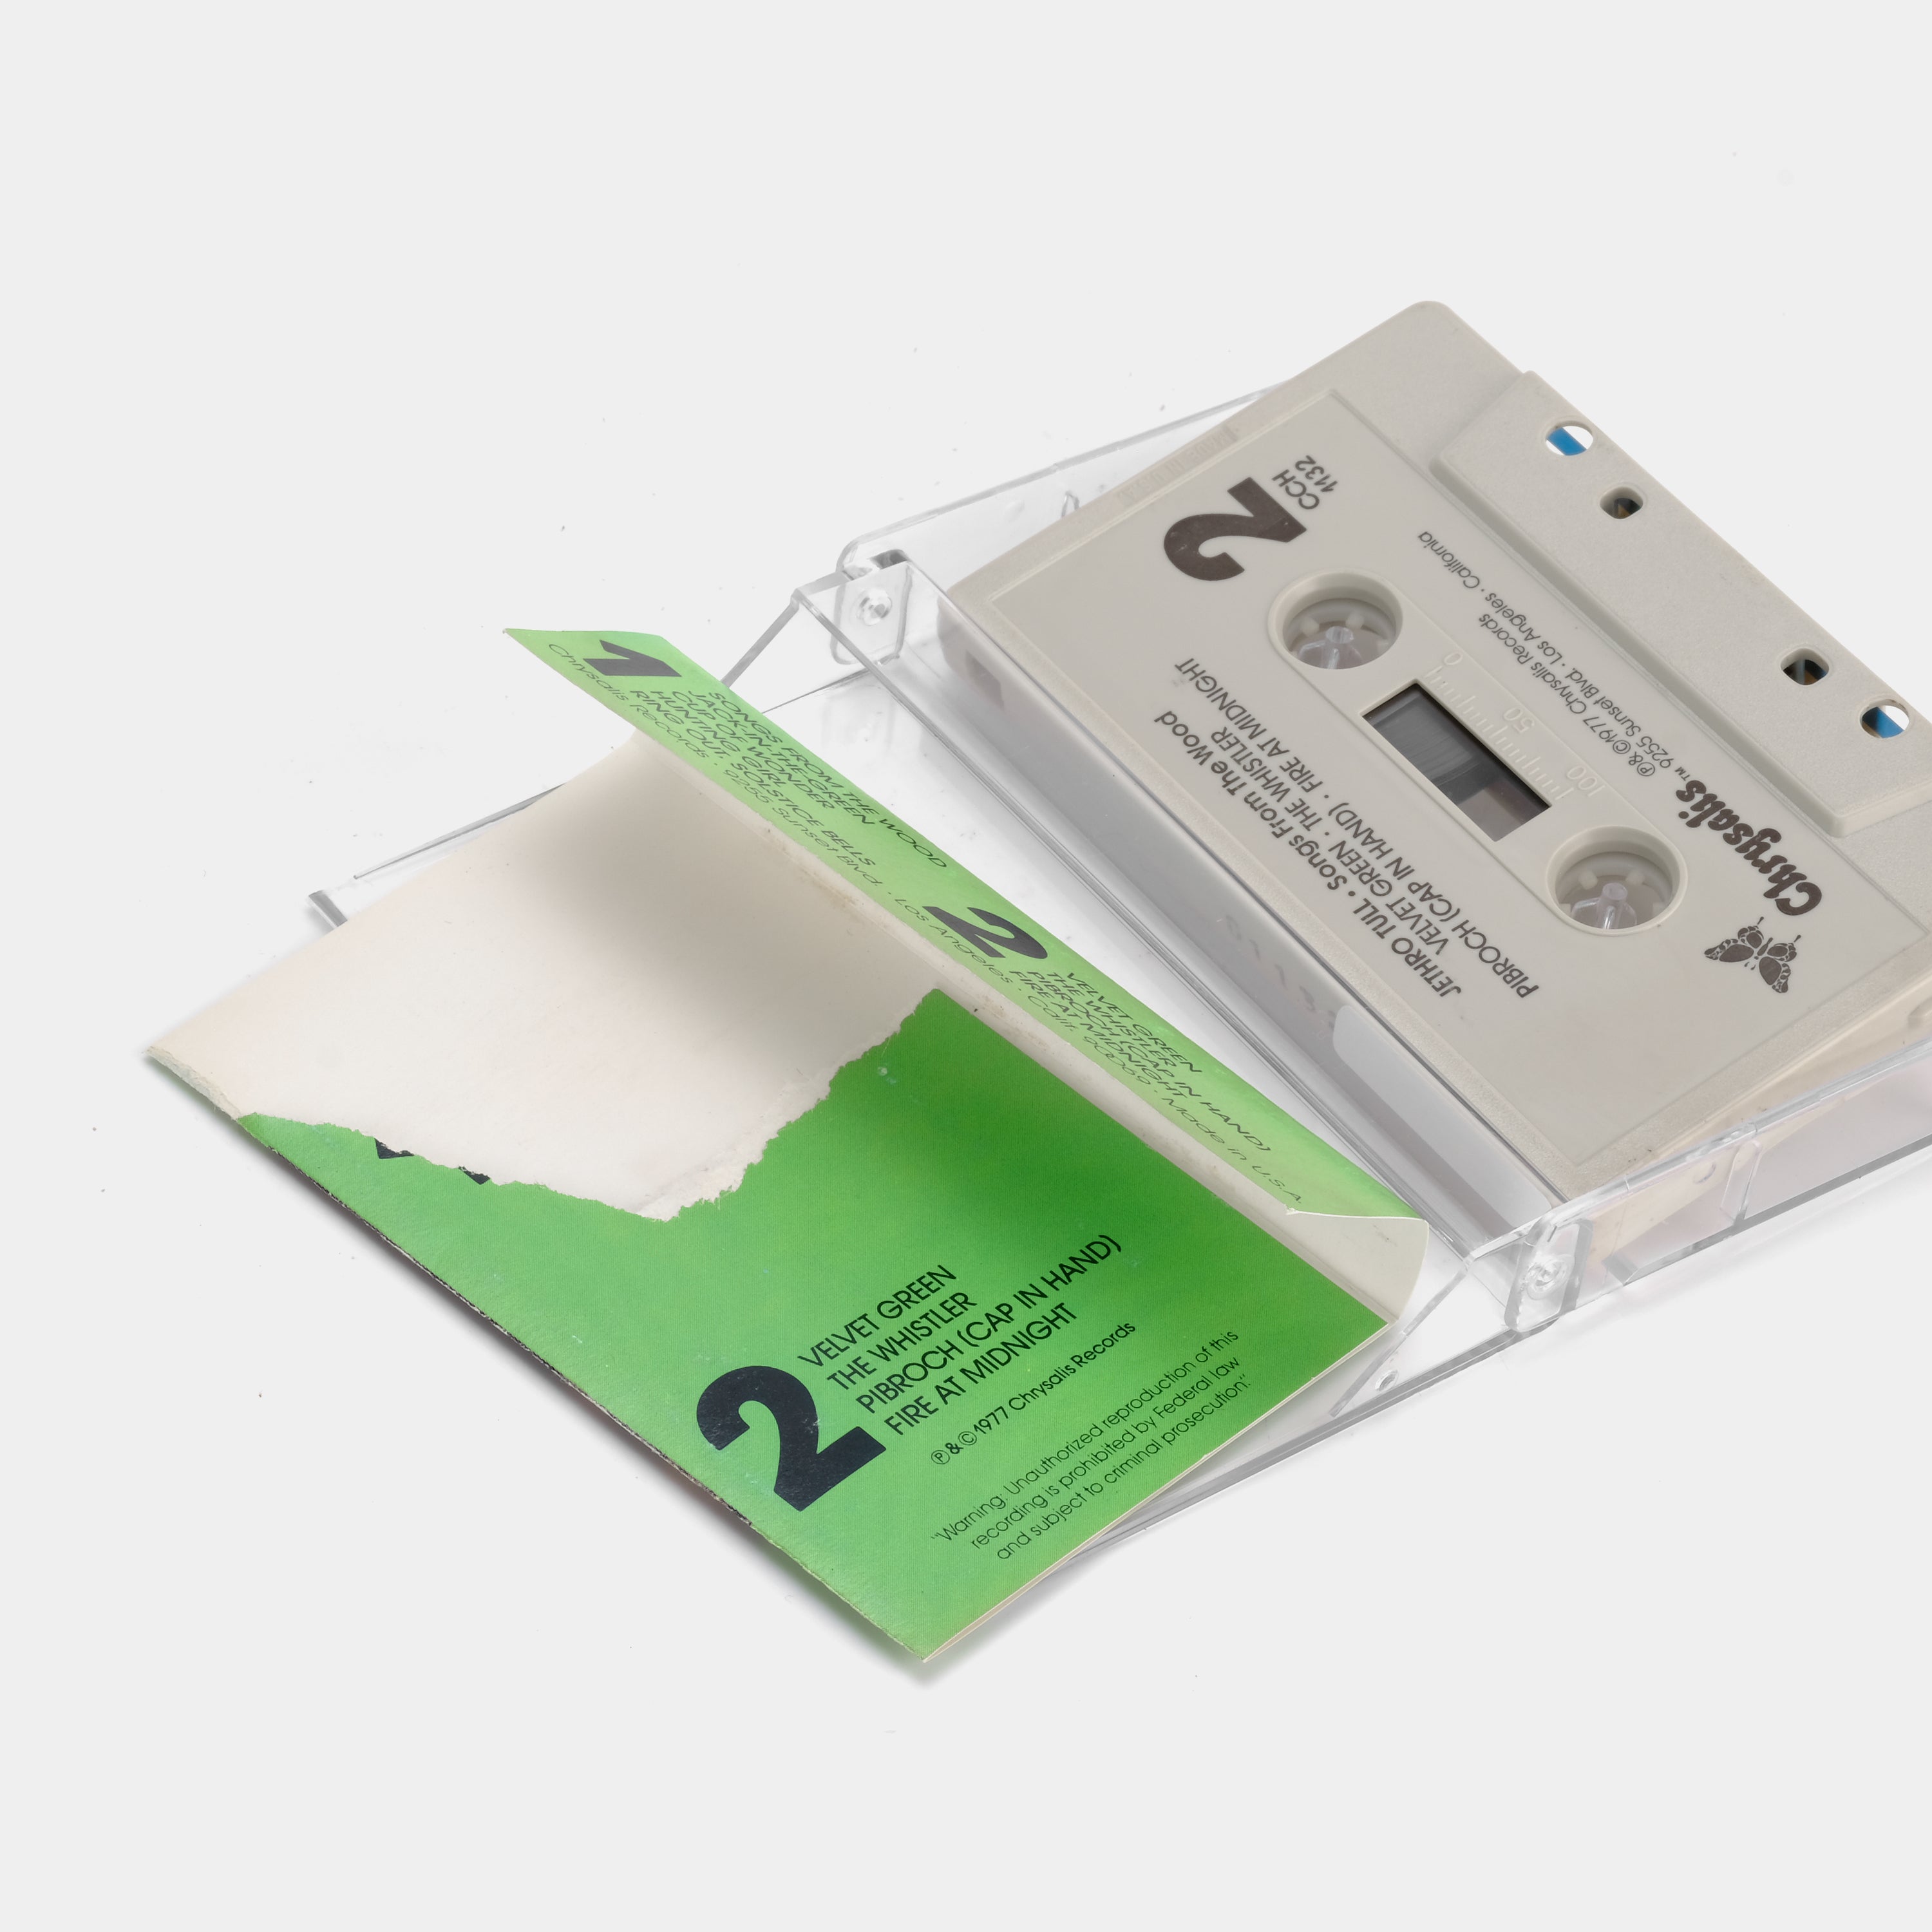 Jethro Tull - Songs From The Wood Cassette Tape